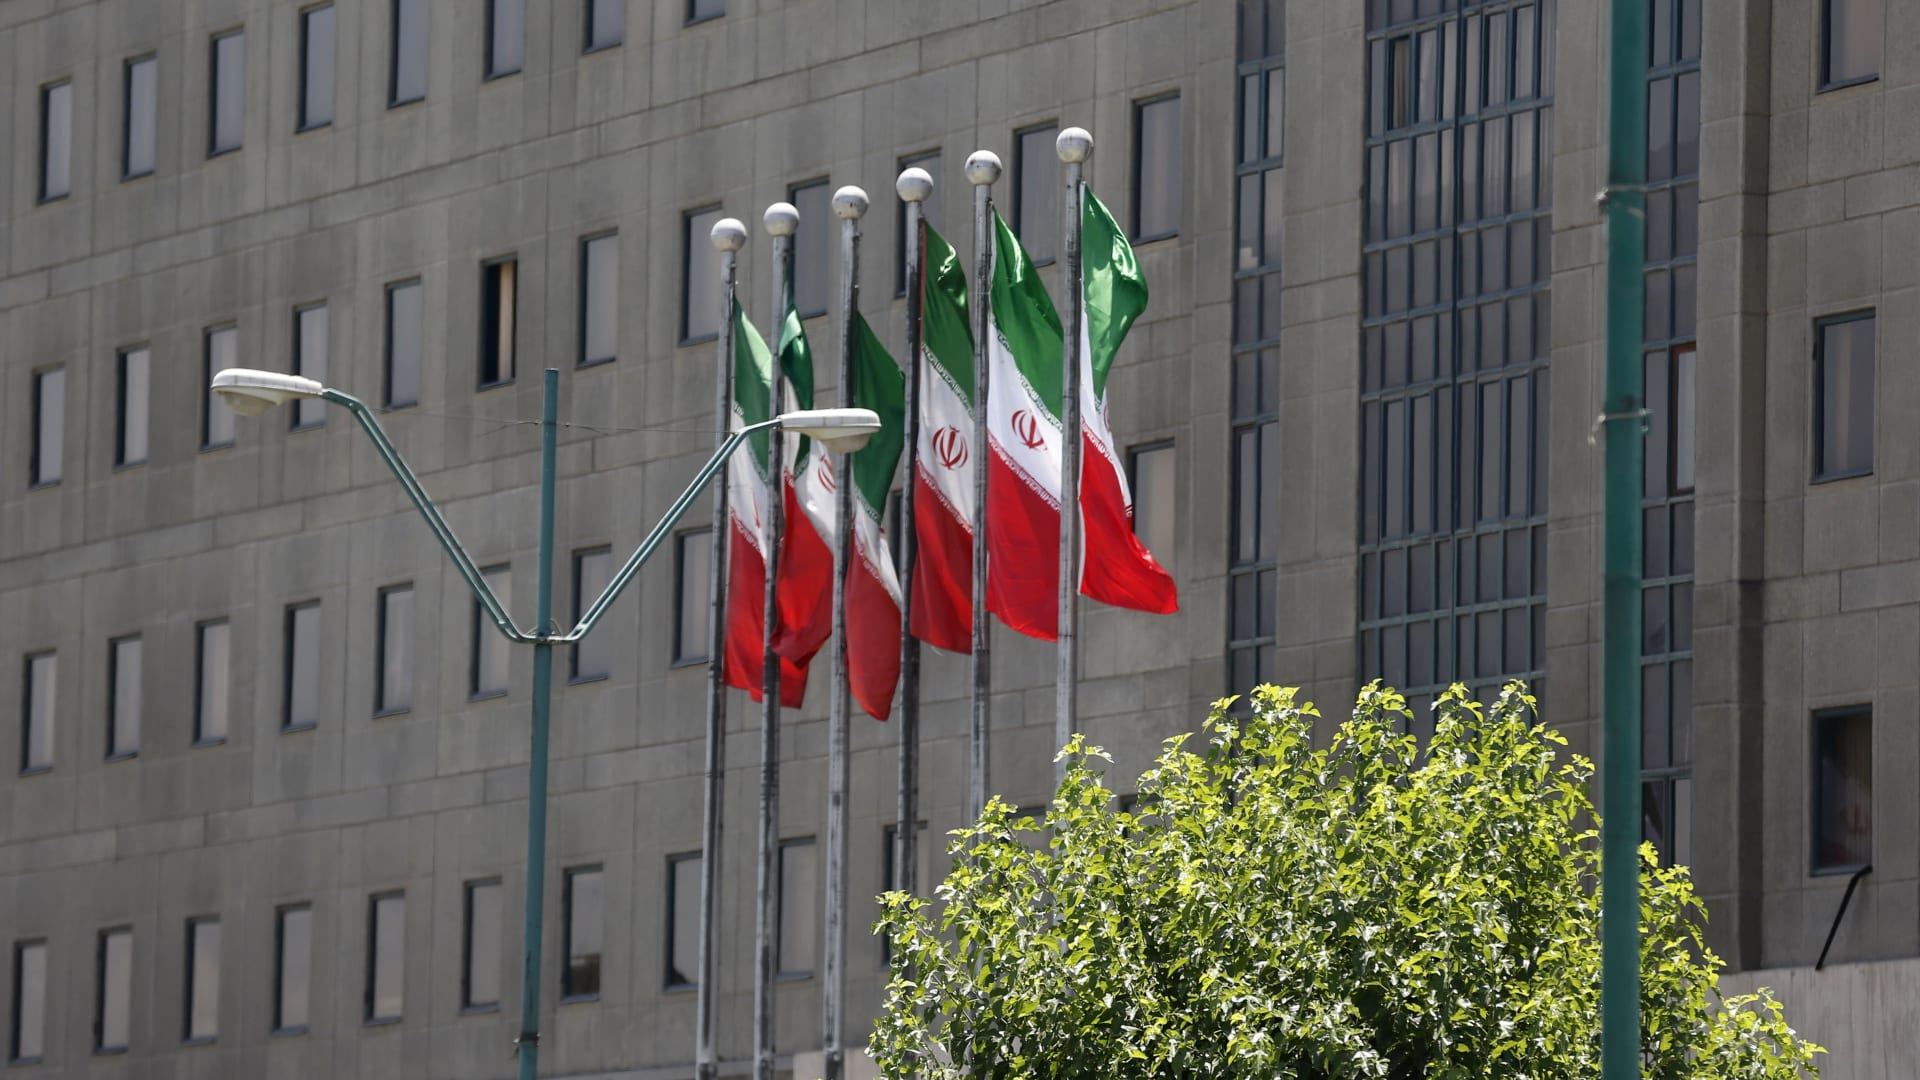 إيران تقول إنها ستستأنف محادثات الاتفاق النووي في نوفمبر